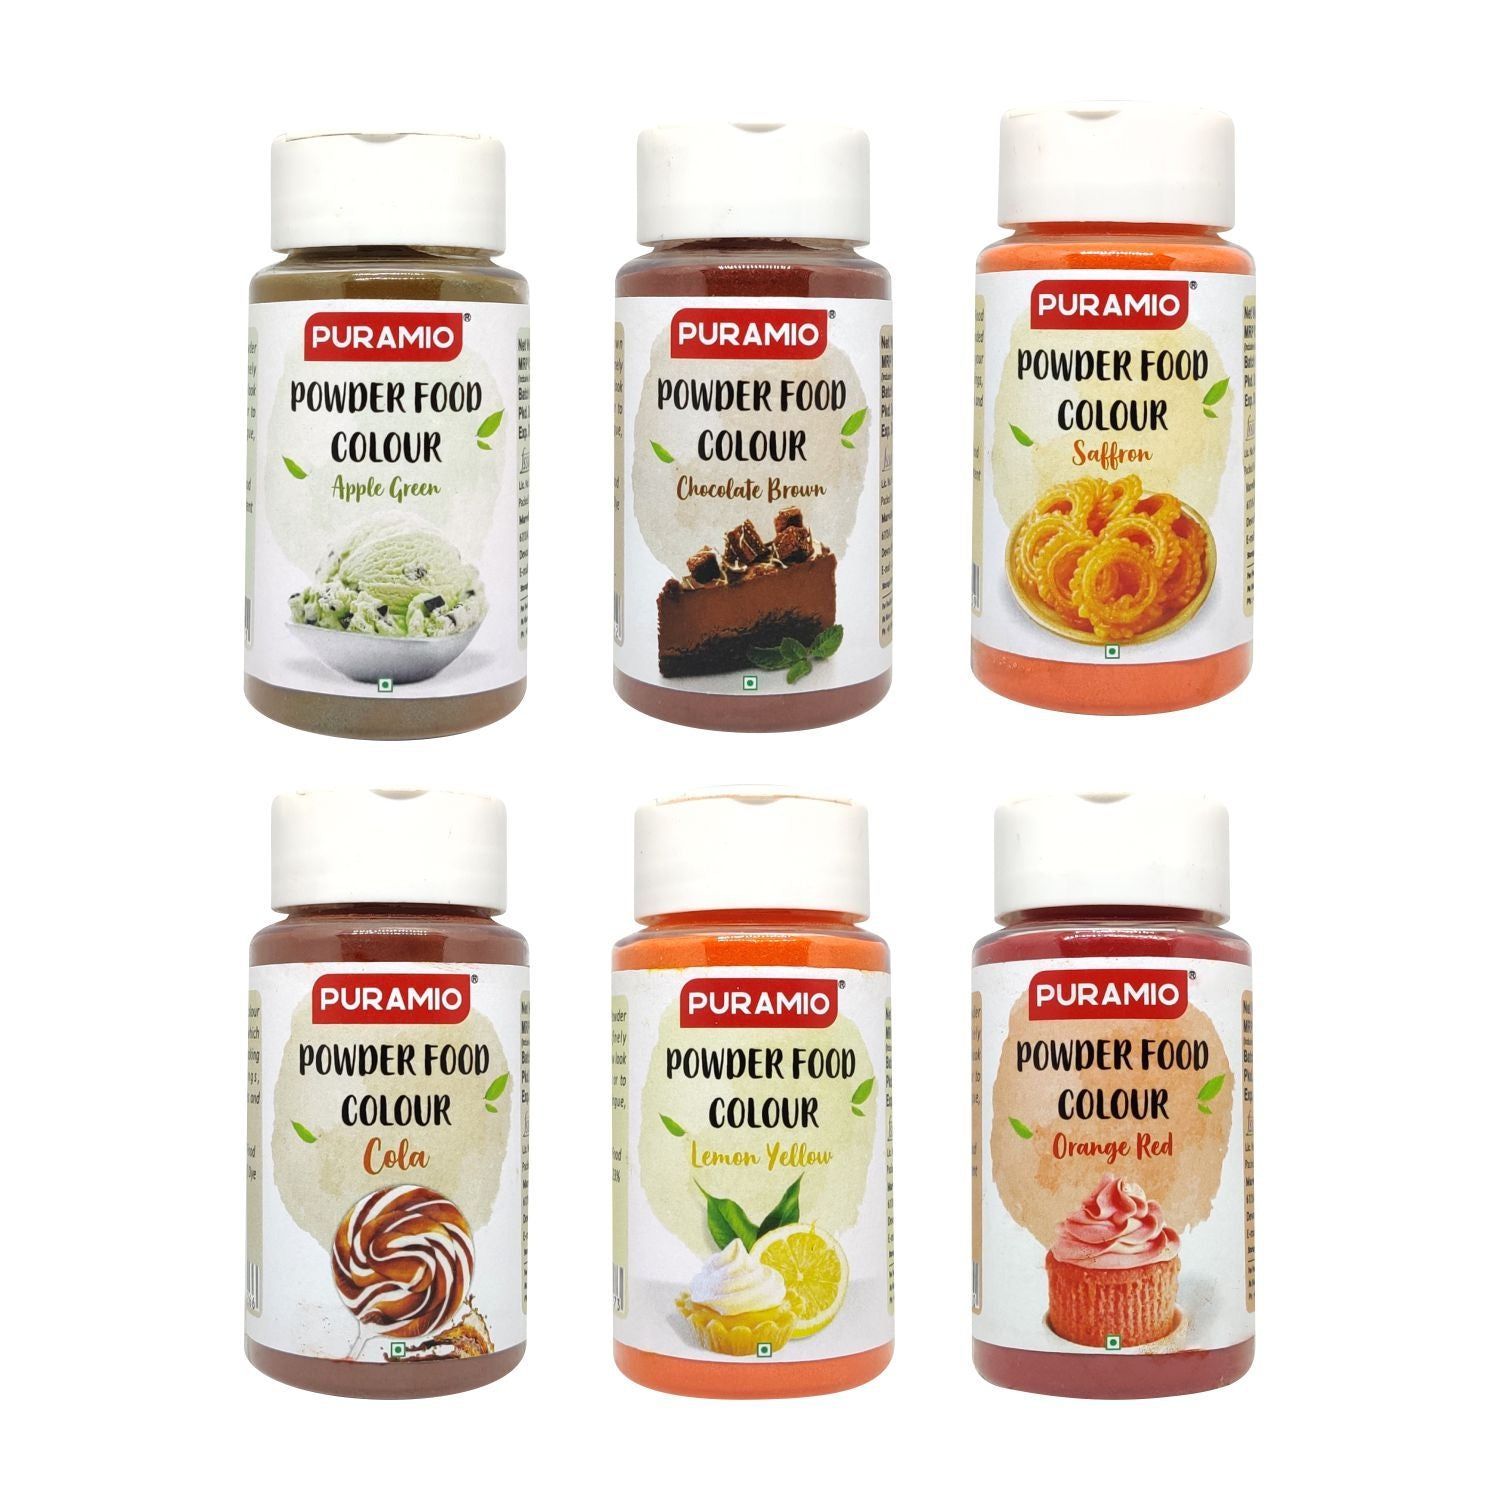 Puramio Powder Food Colour Combo of - (Apple Green, Chocolate Brown, Saffron (Kesari), Cola, Lemon Yellow, Orange Red), 125 gm Each - Pack of 6